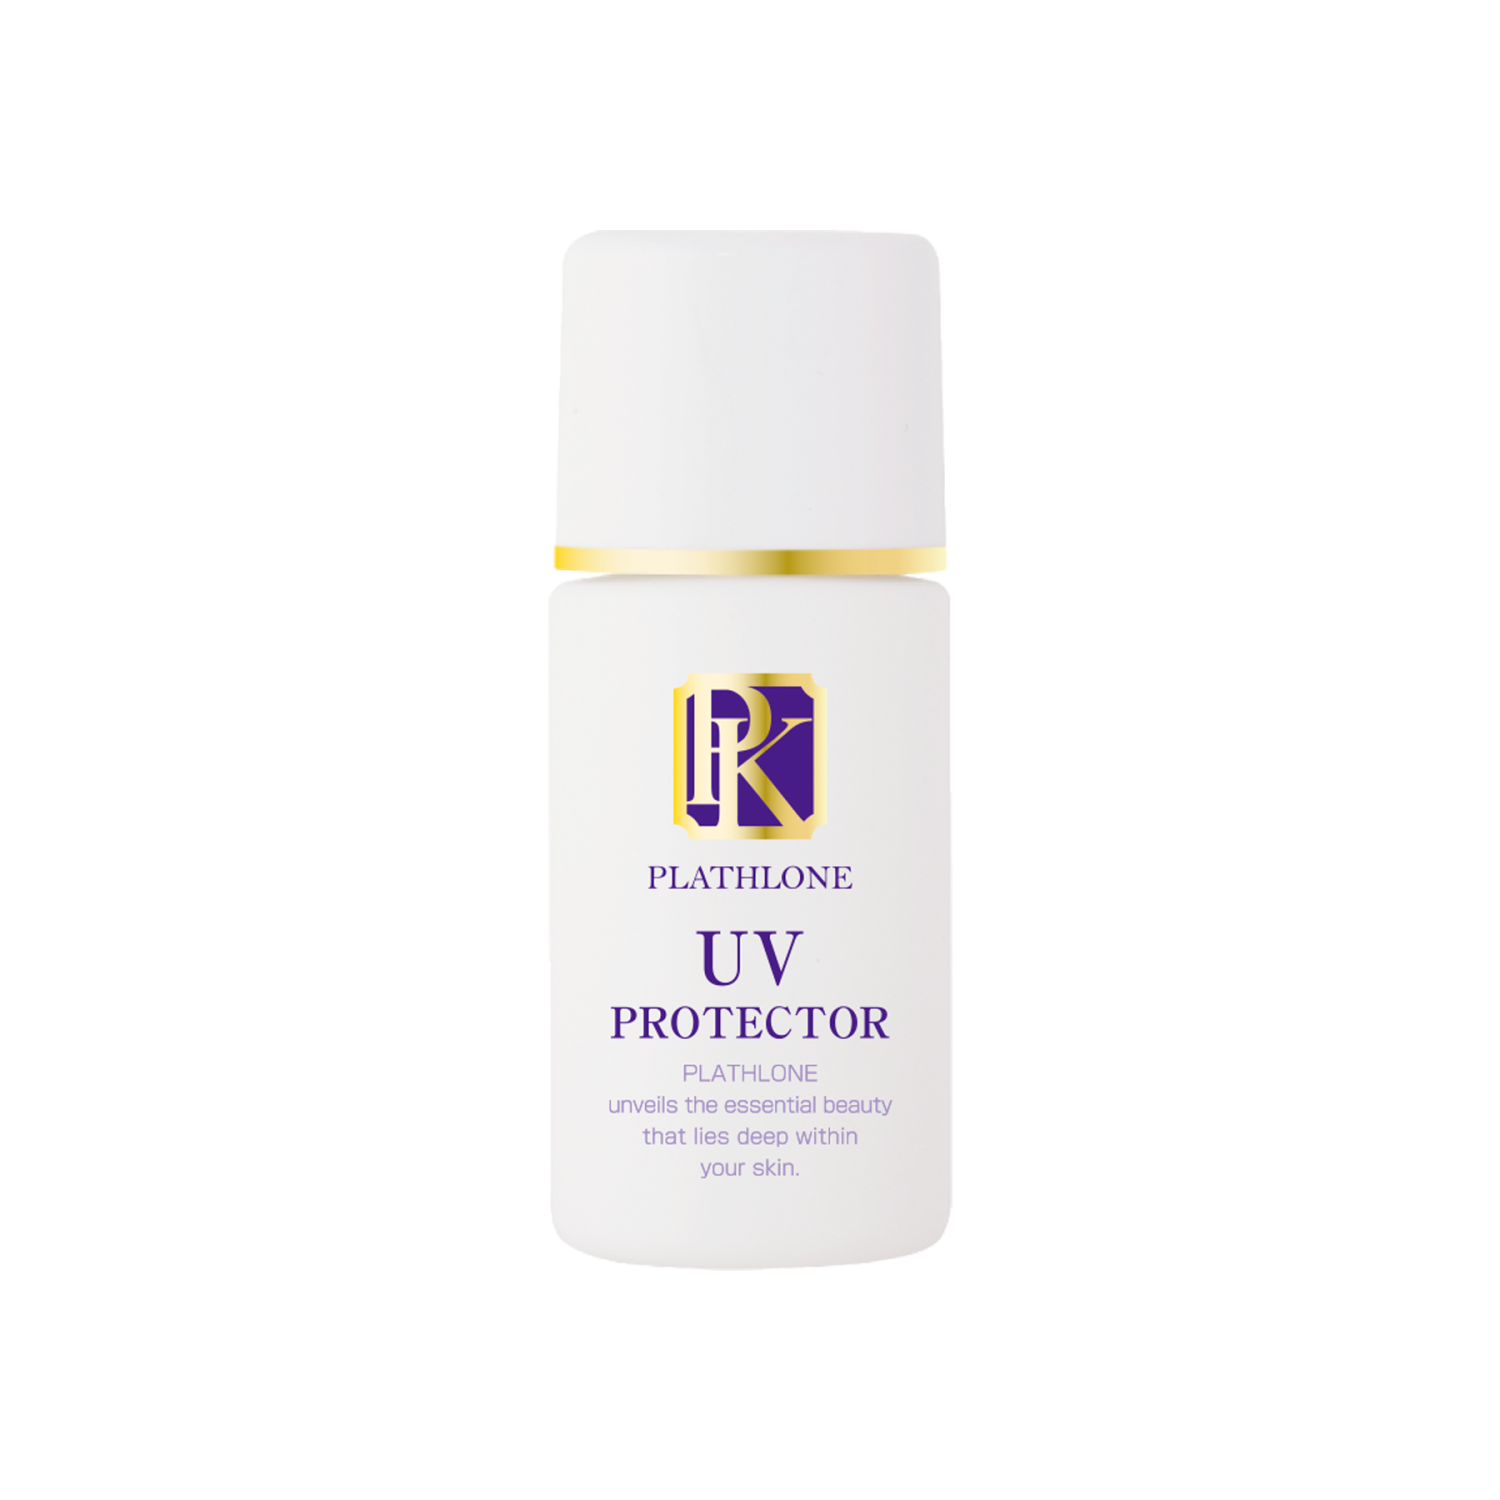 Плацентарный крем для лица Защита от Ультрафиолета  защита от солнца UV Protector  SPF18 Plathlone